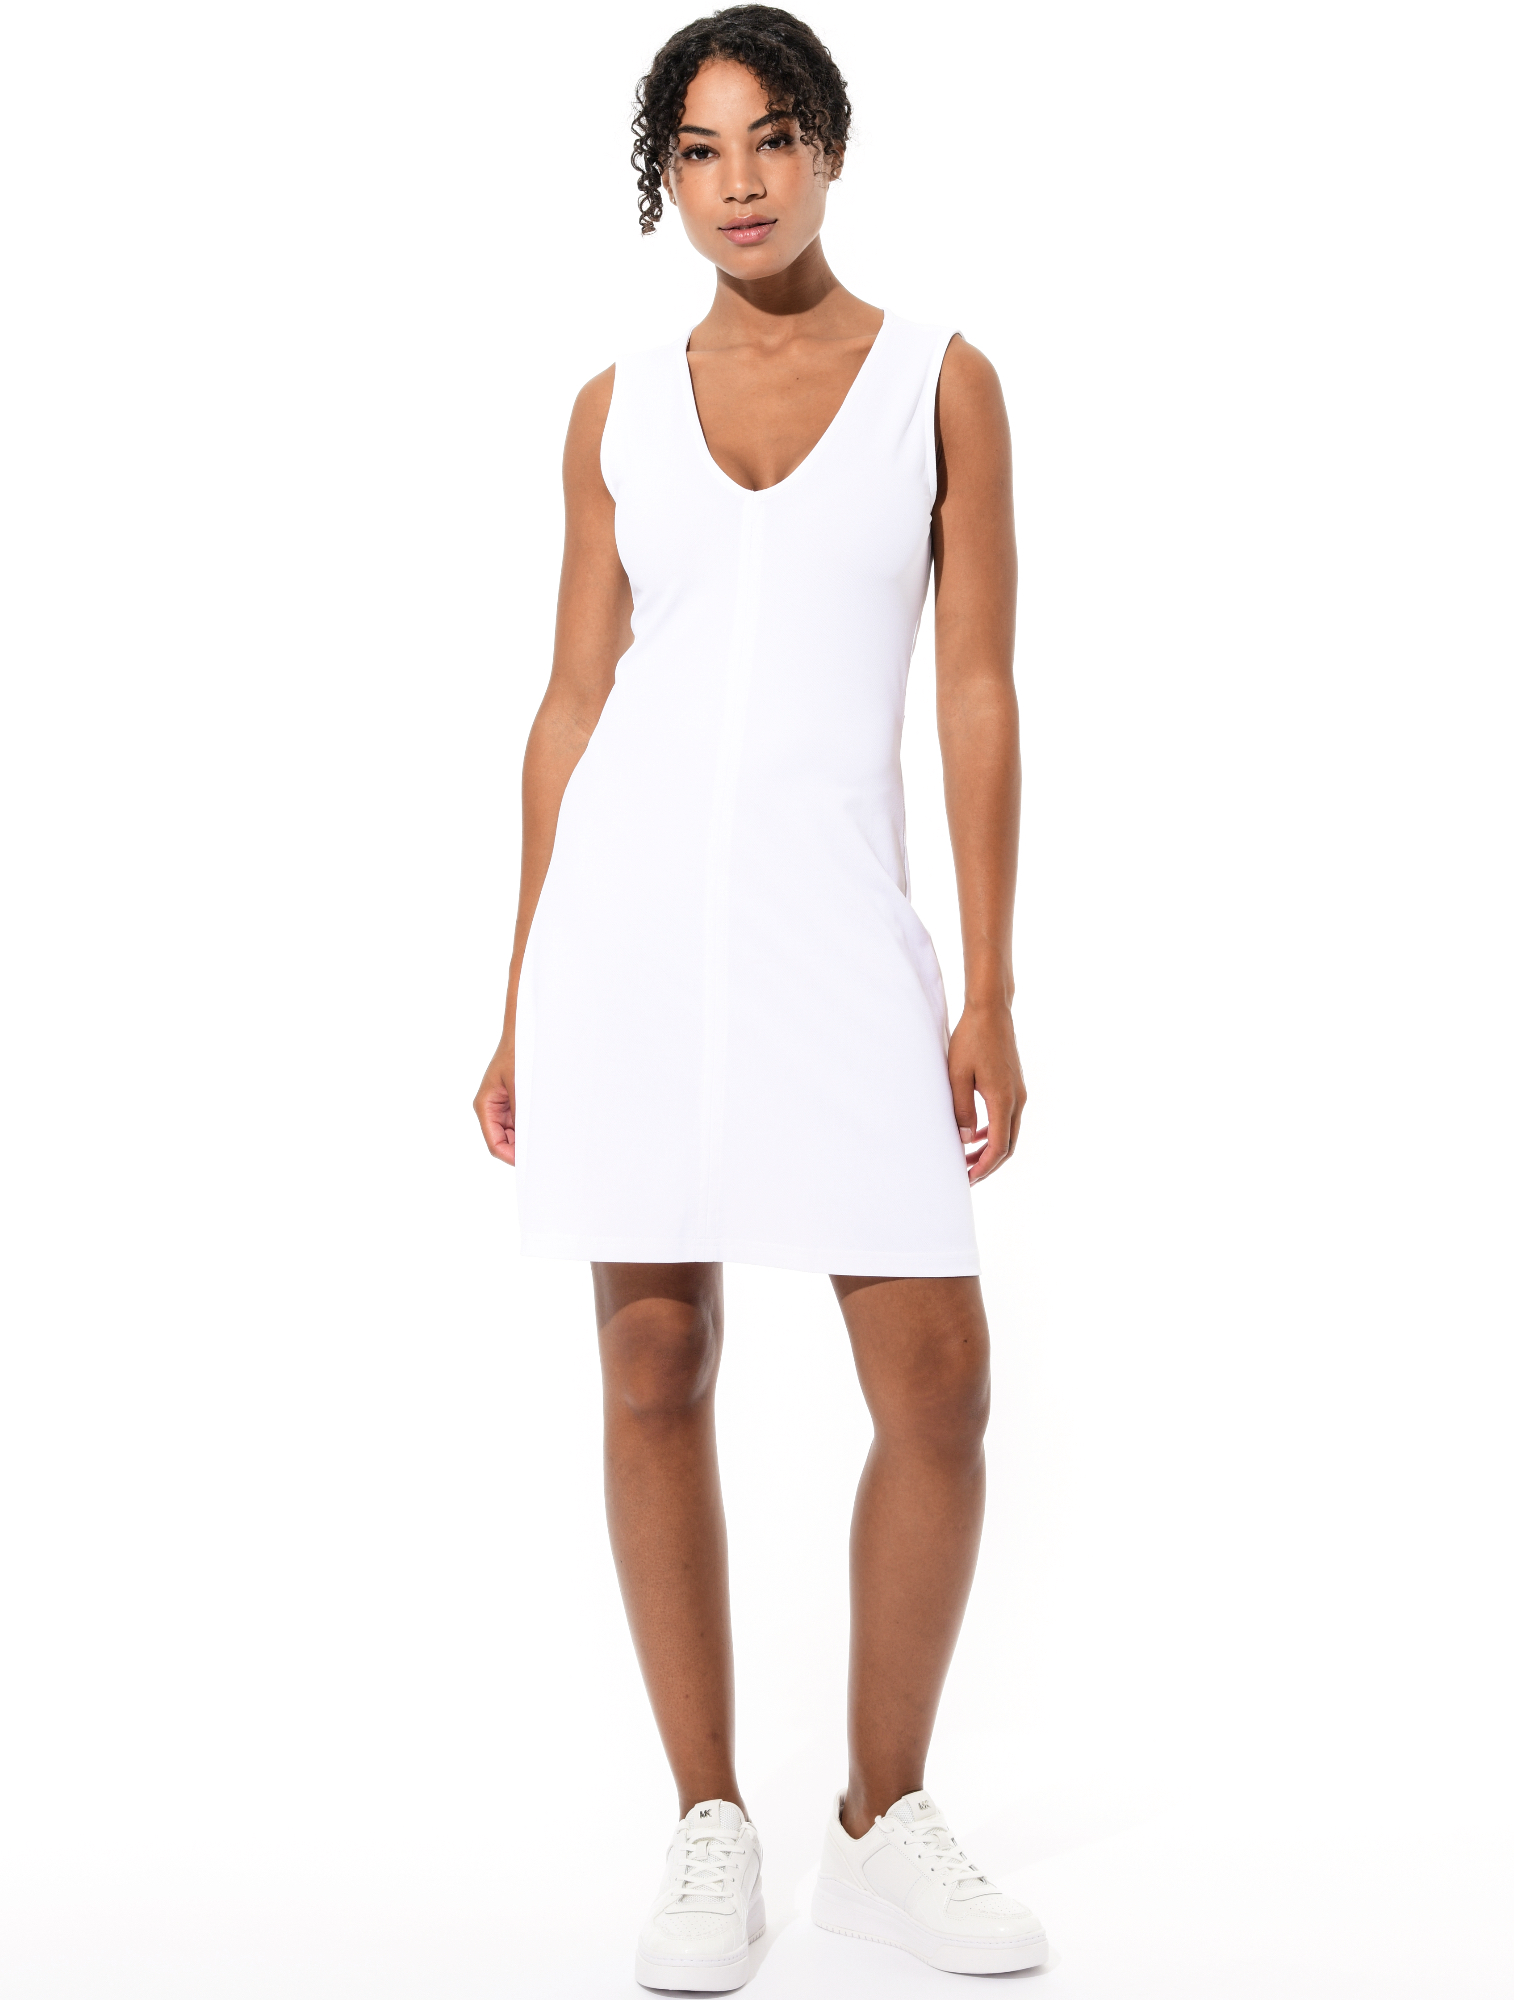 Pique dress white 